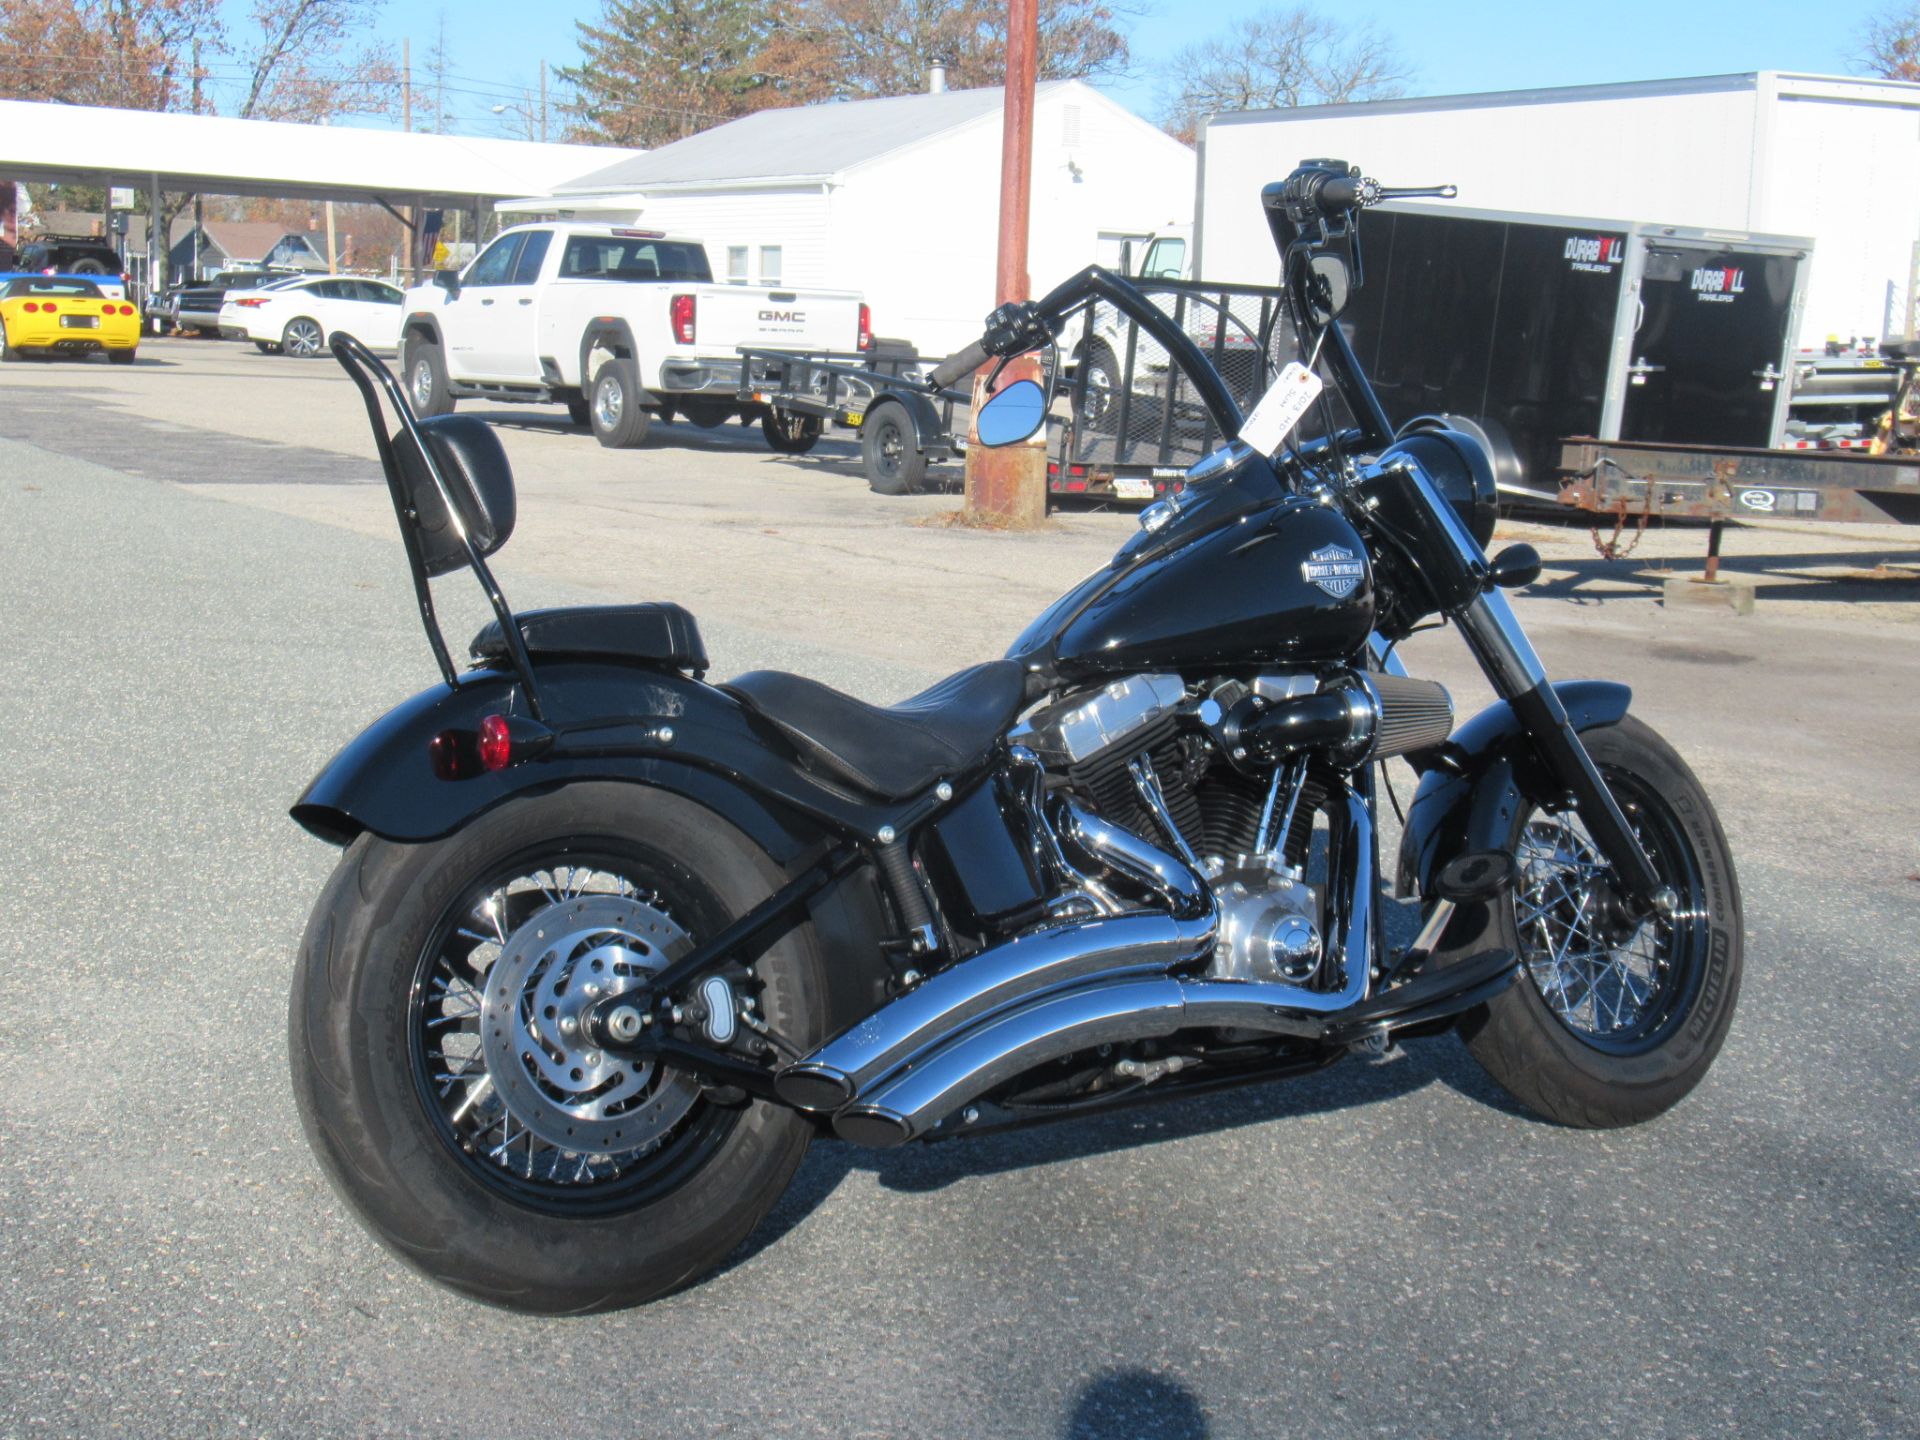 2013 Harley-Davidson Softail Slim® in Springfield, Massachusetts - Photo 3